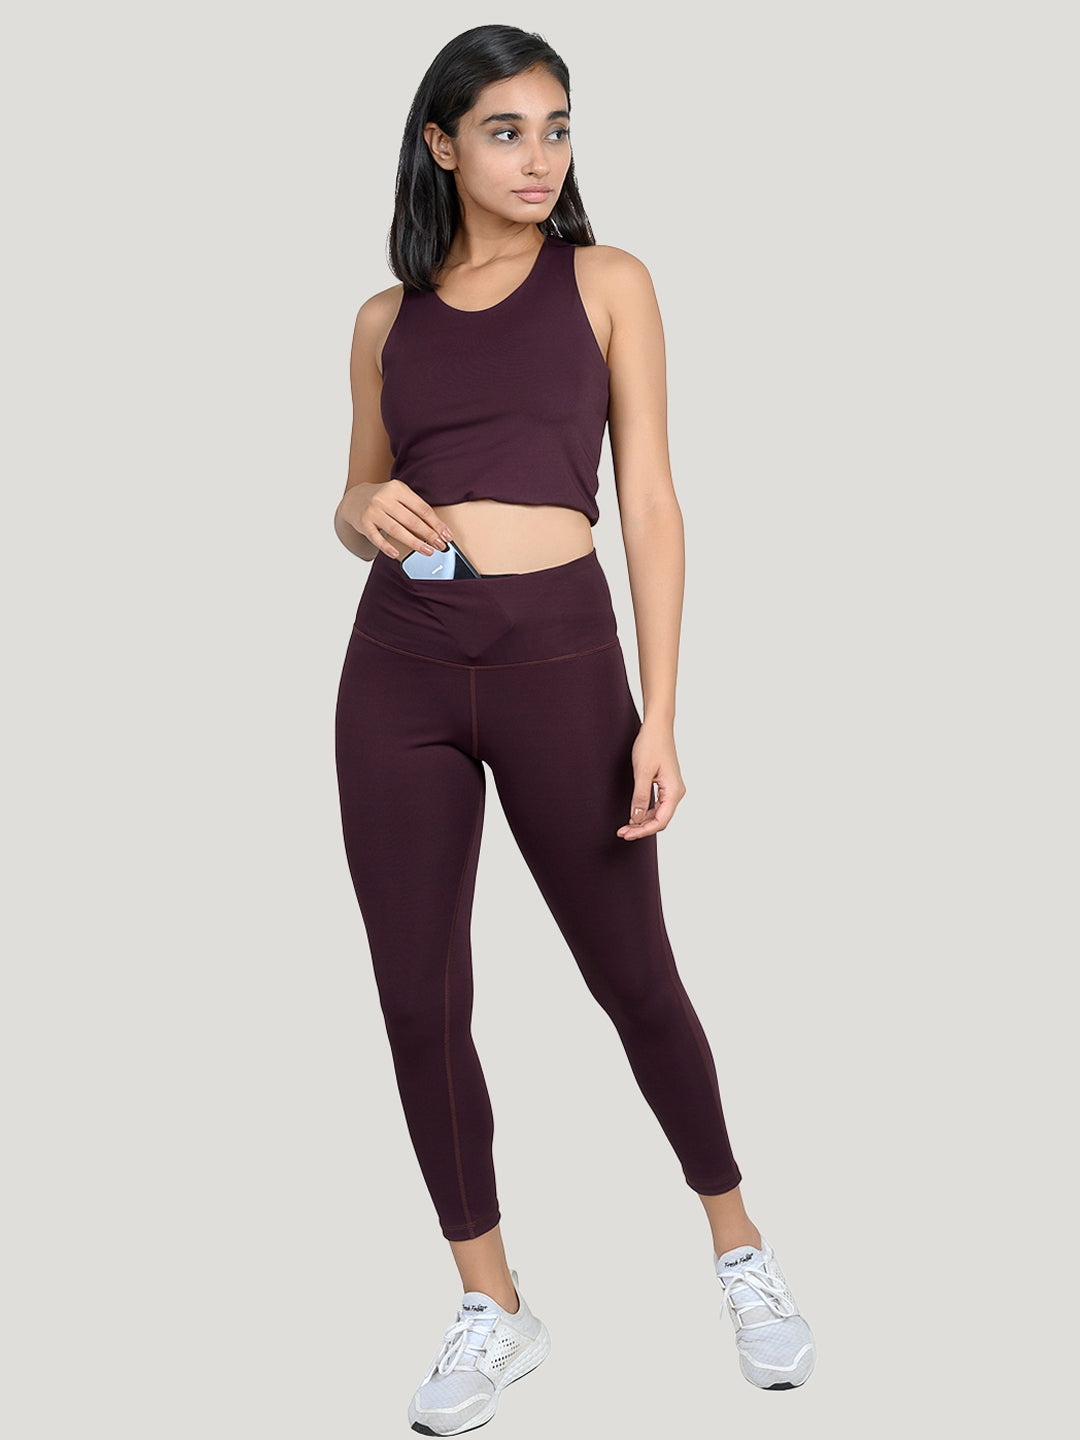 Phone pocket leggings & sports bra combo - Women's Wine Maroon – TRUEREVO